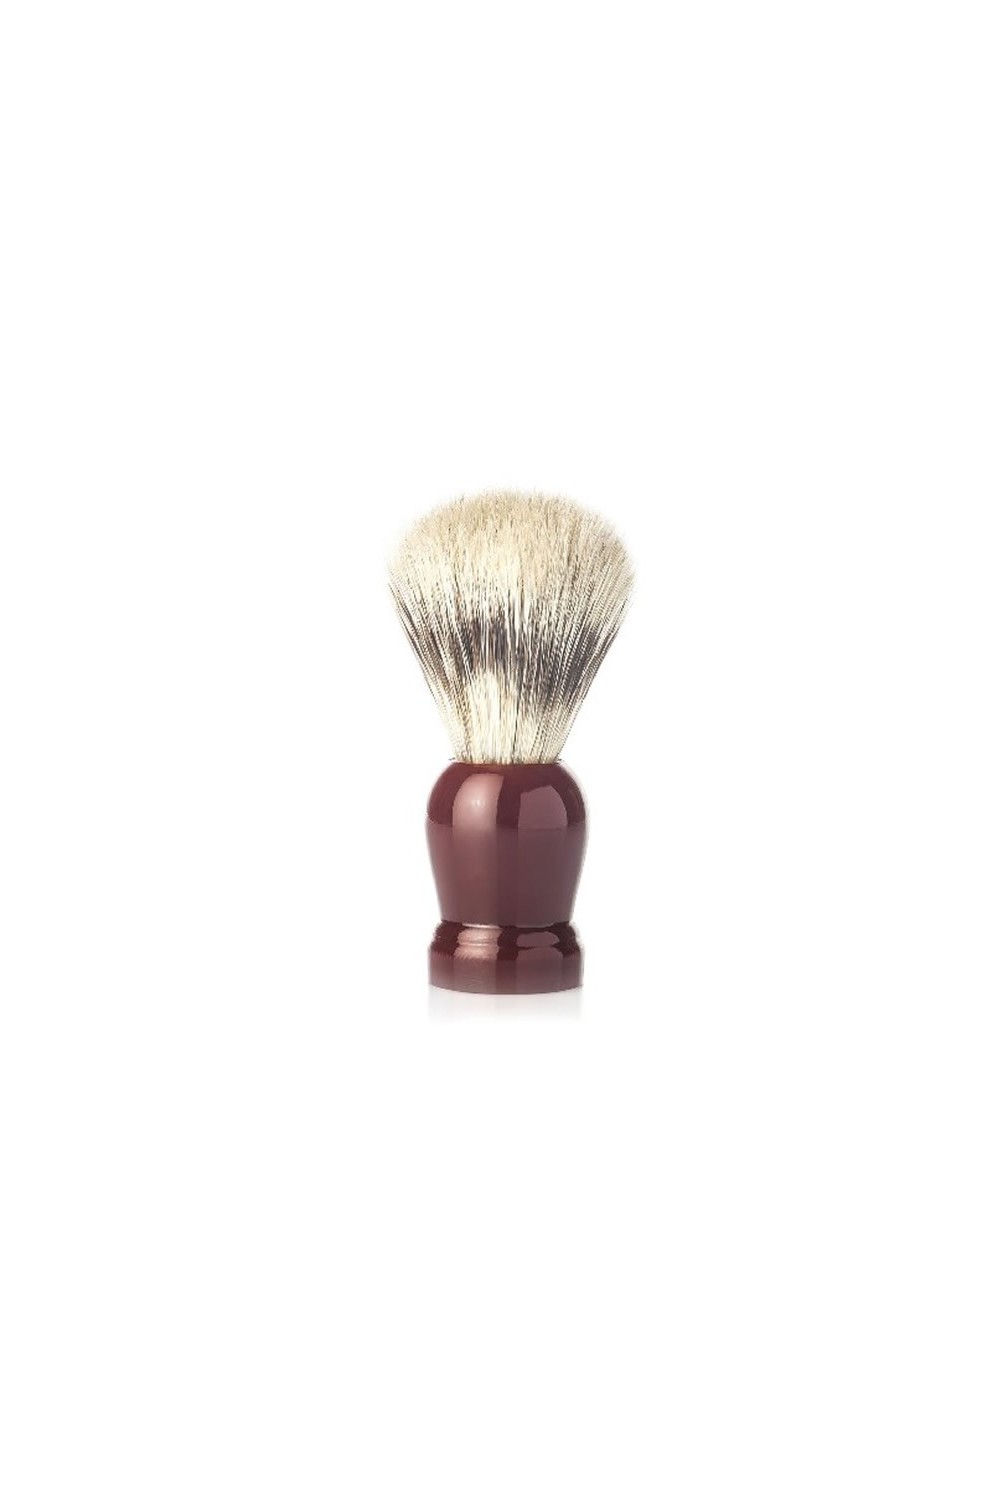 Vielong J&M Natural Bristle Shaving Brush 21mm Brown